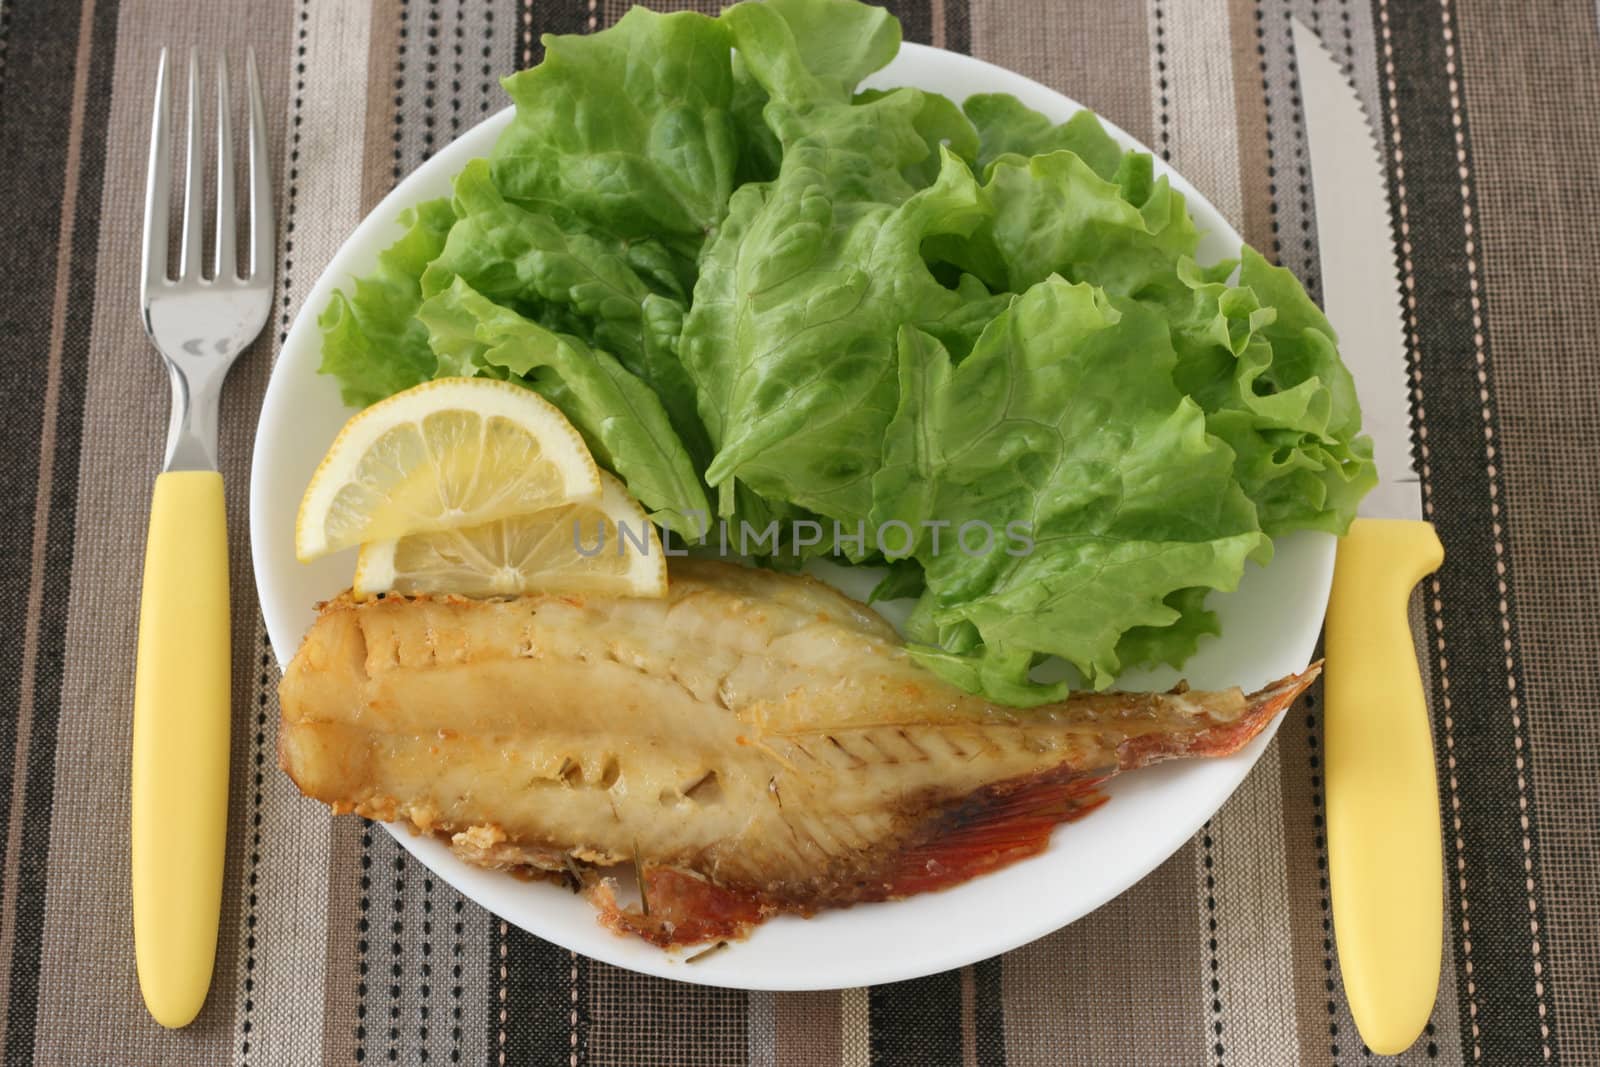 fried fish with salad by nataliamylova